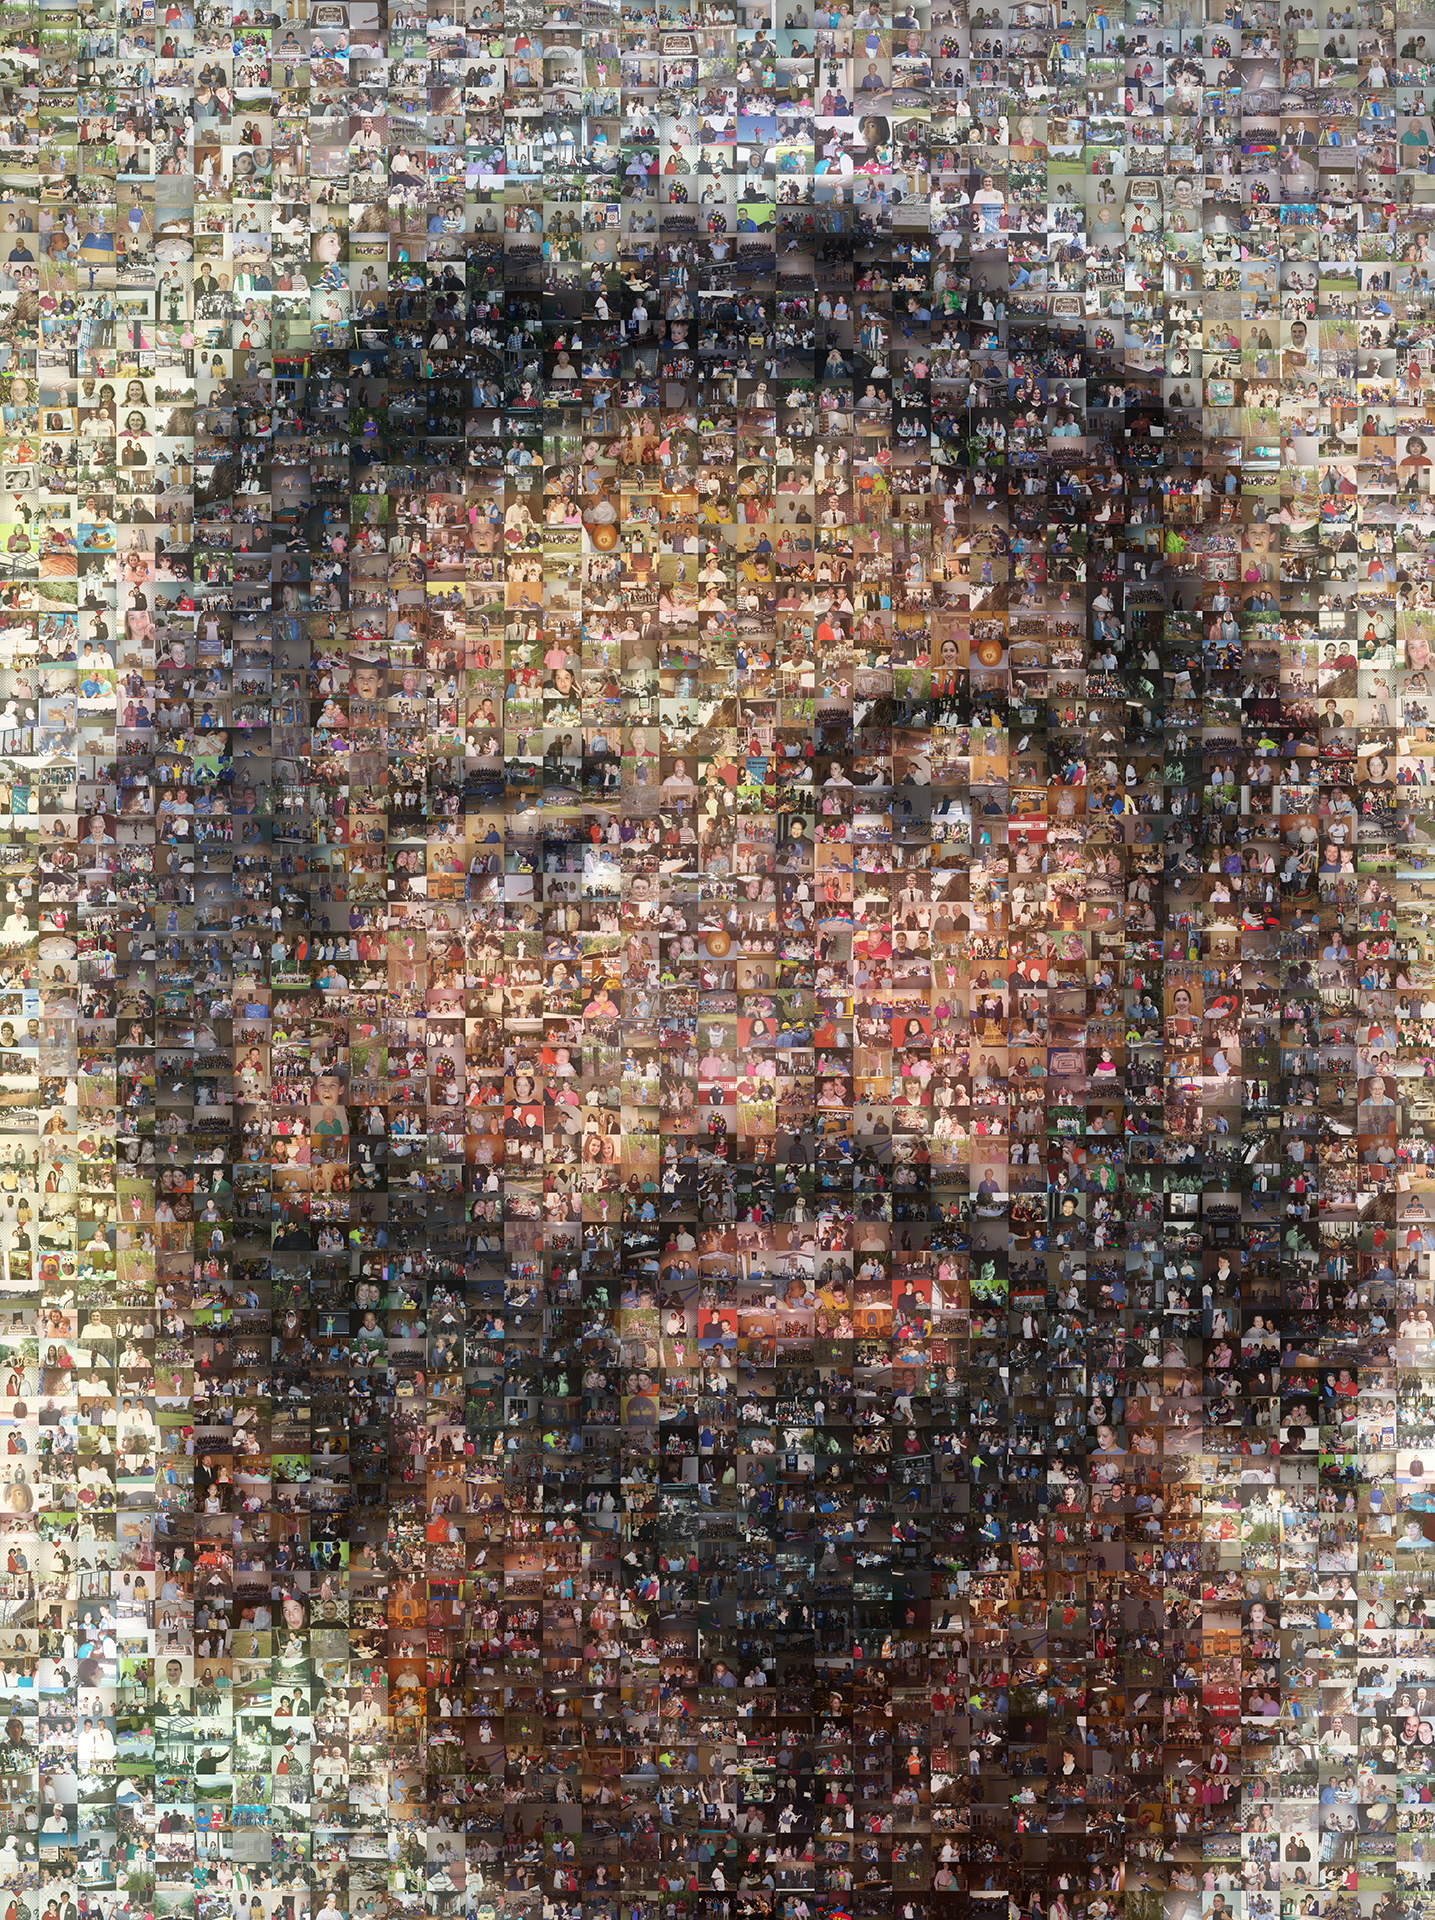 photo mosaic created using 2019 religious member photos